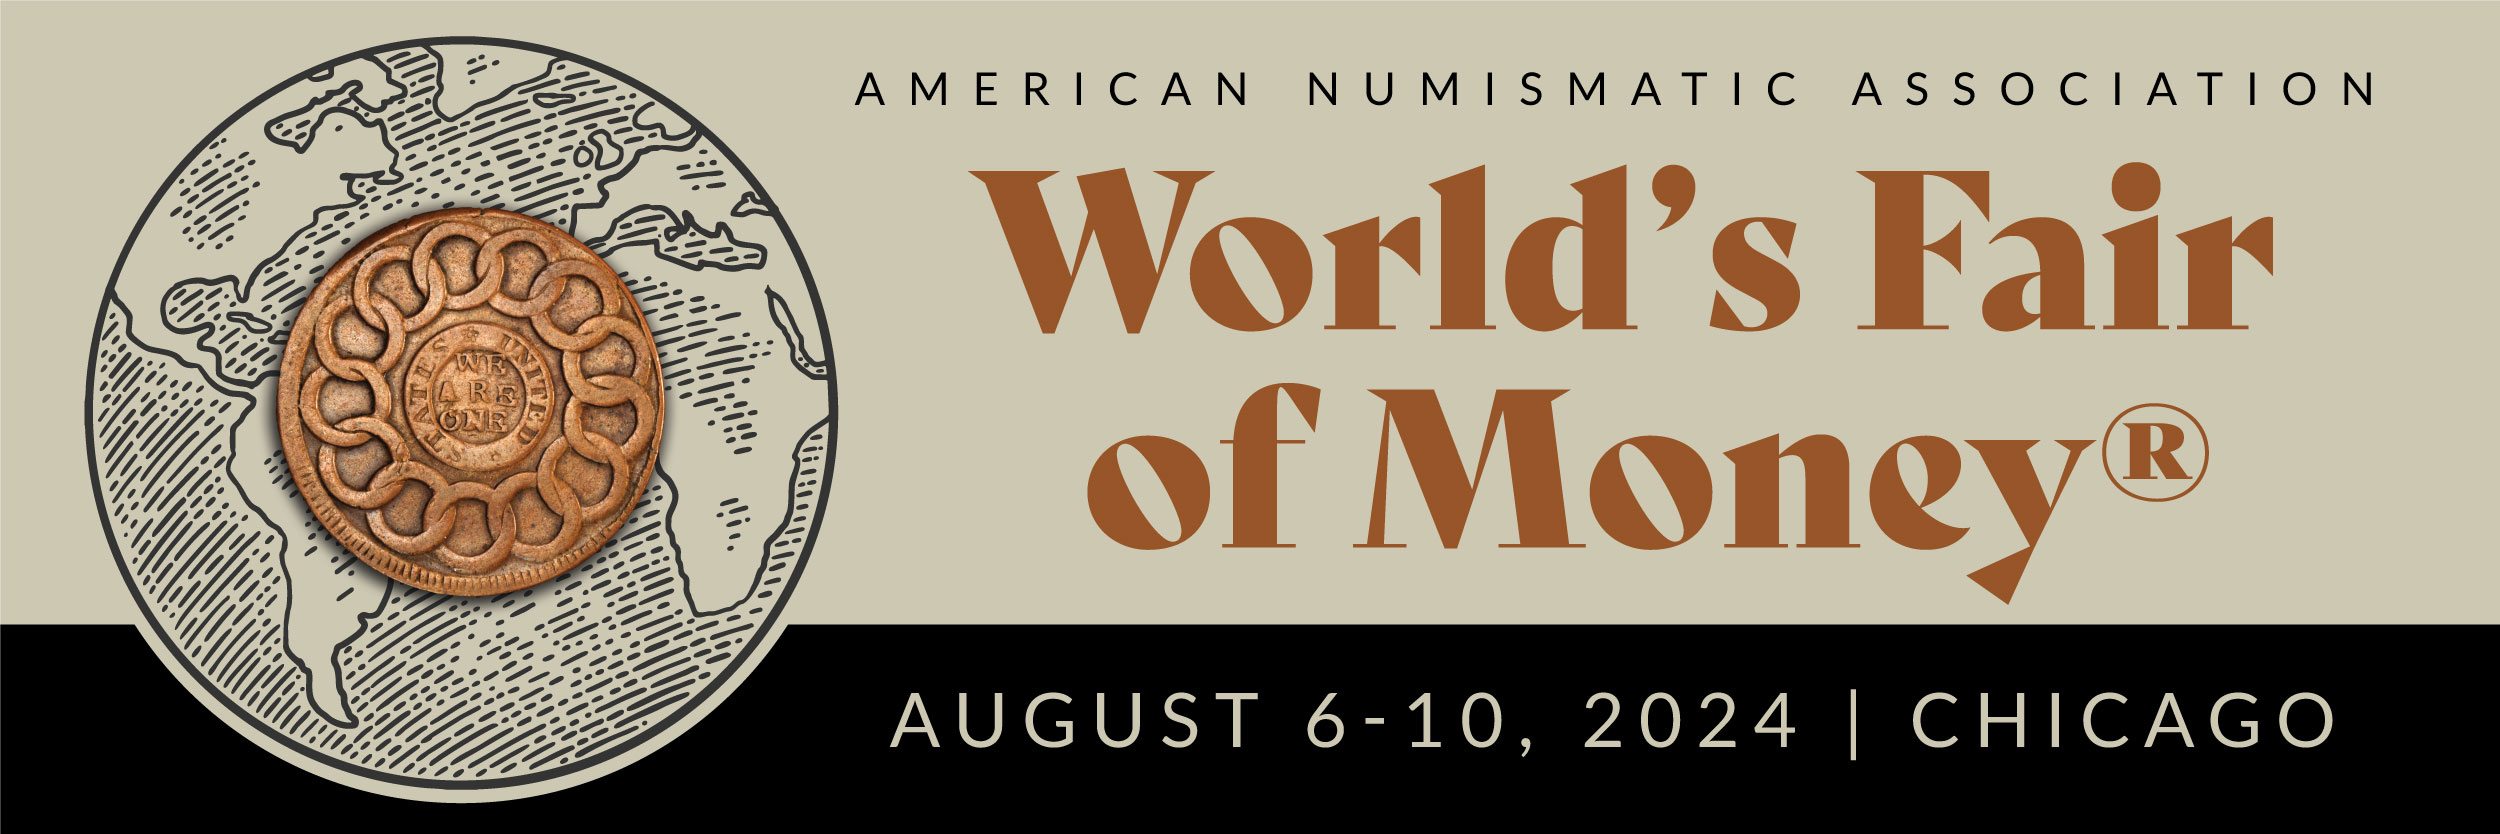 World's Fair of Money® - American Numismatic Association